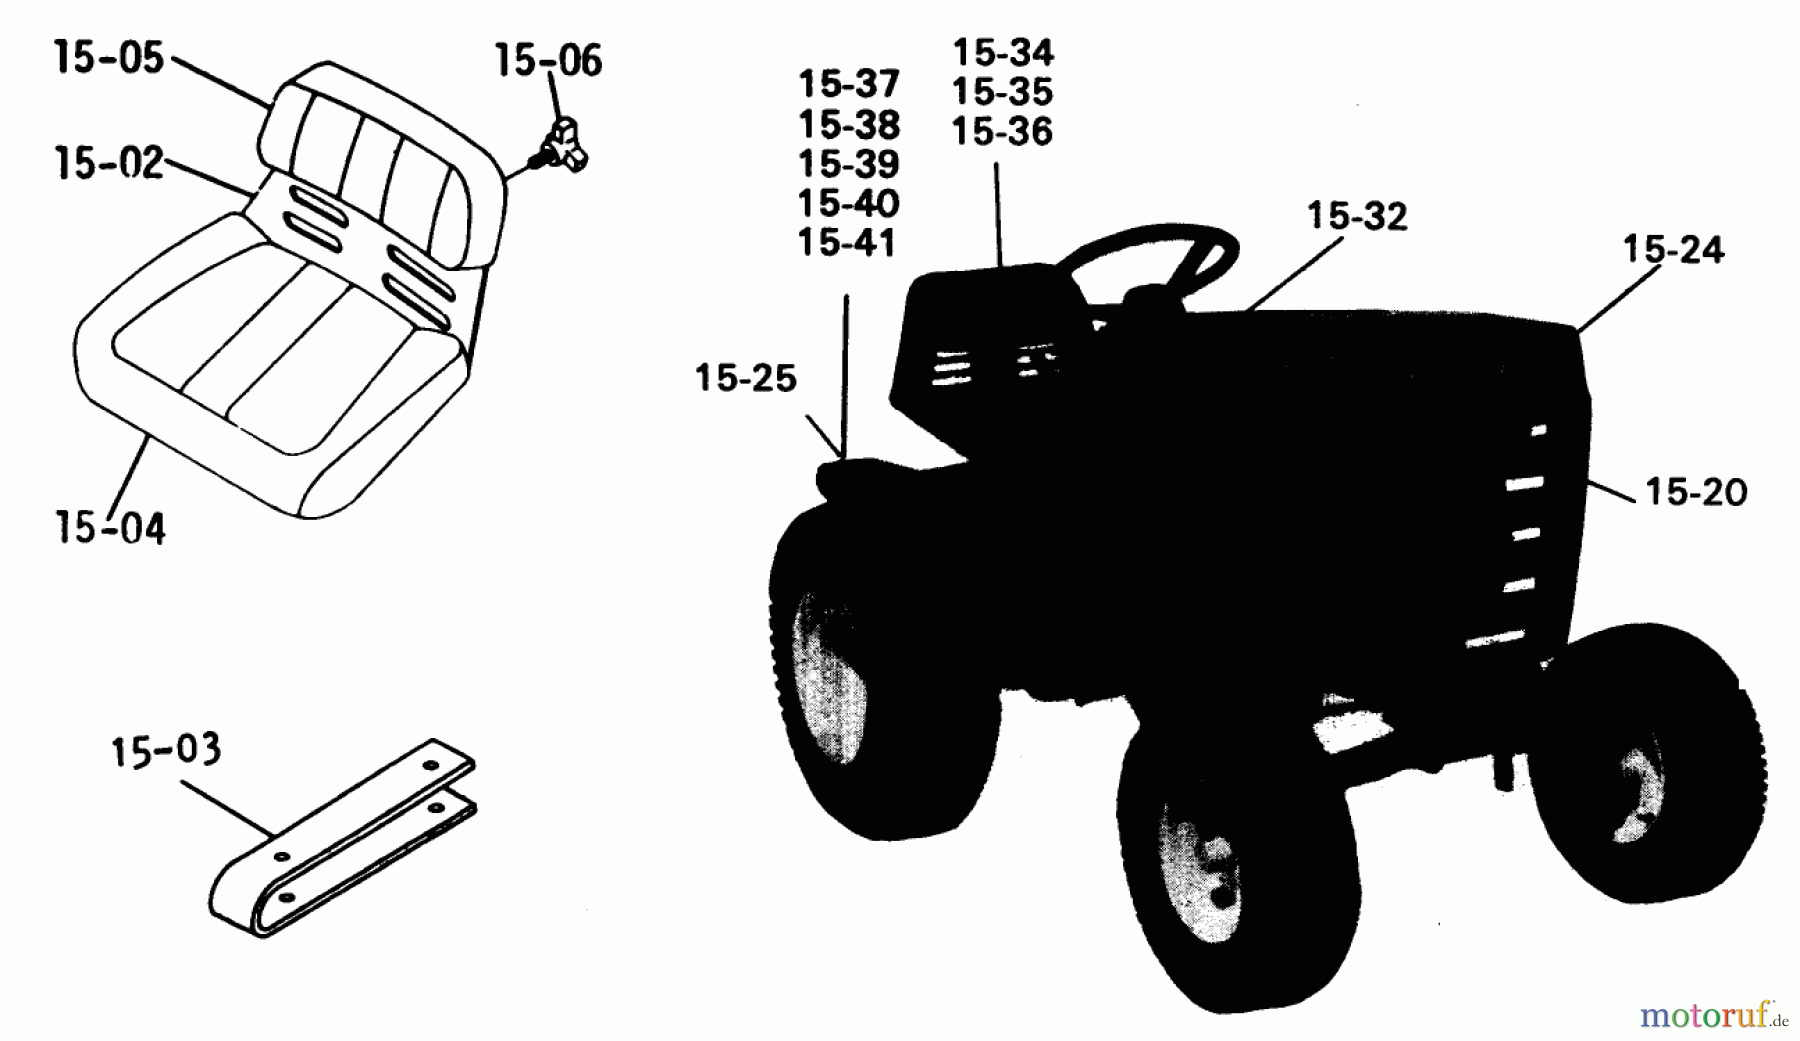  Toro Neu Mowers, Lawn & Garden Tractor Seite 1 1-0375 (C-120) - Toro C-120 8-Speed Tractor, 1975 15.000 SEATS, DECALS MISC. TRIM (FIG. 15)